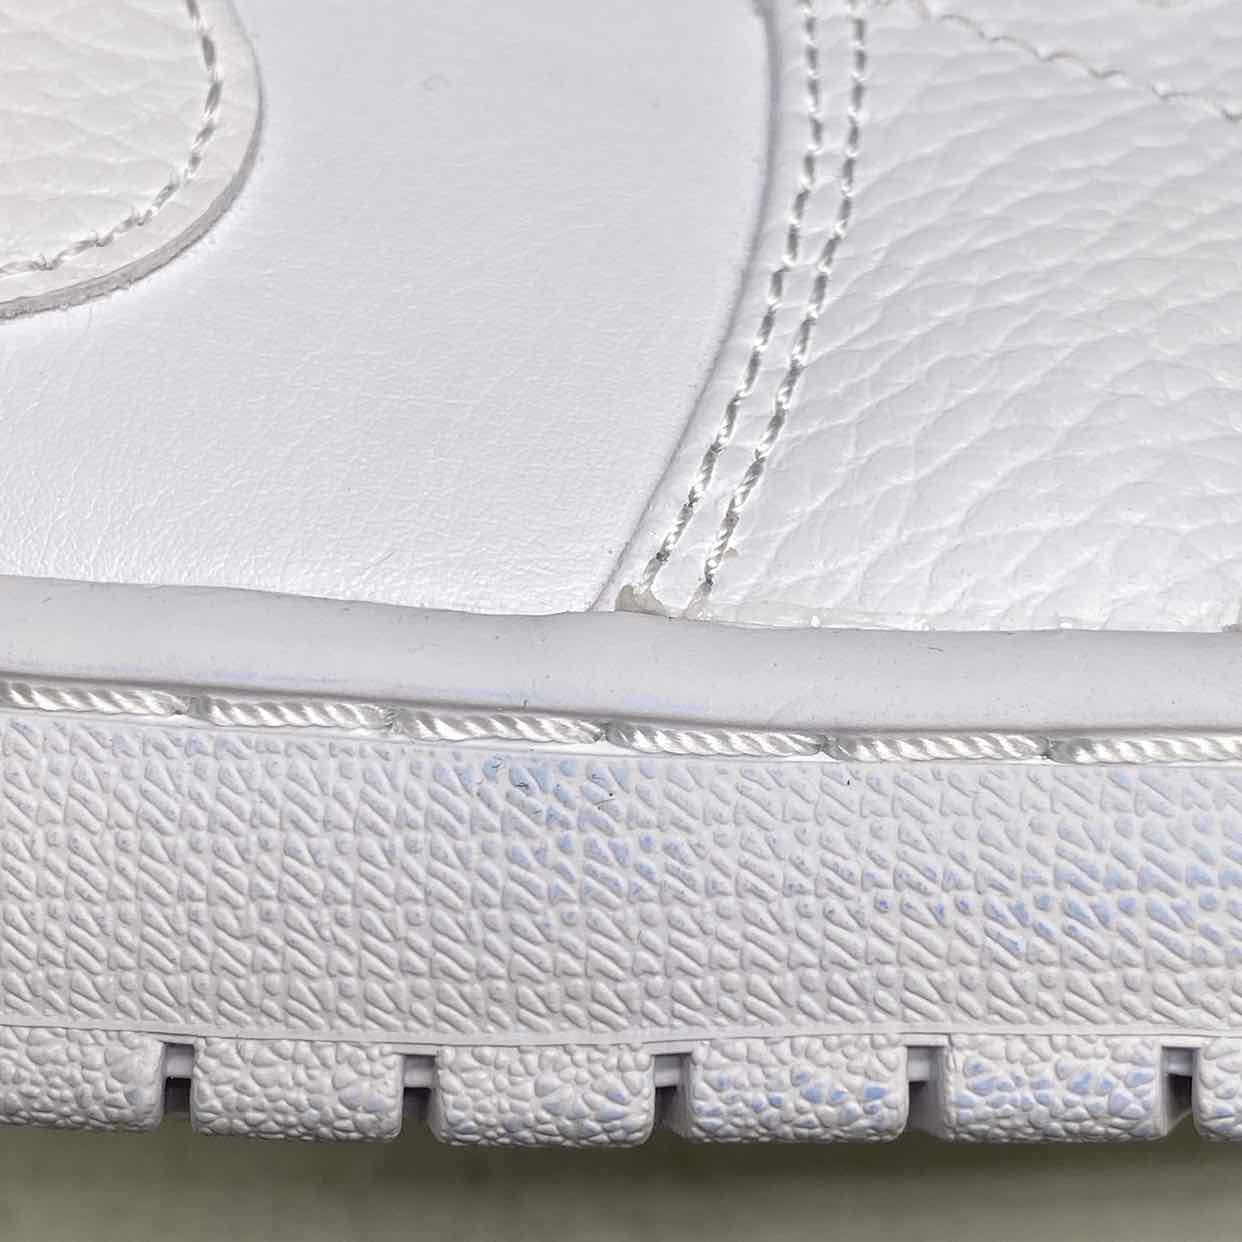 Air Jordan 1 Mid "Triple White 2.0" 2020 New (Cond) Size 11